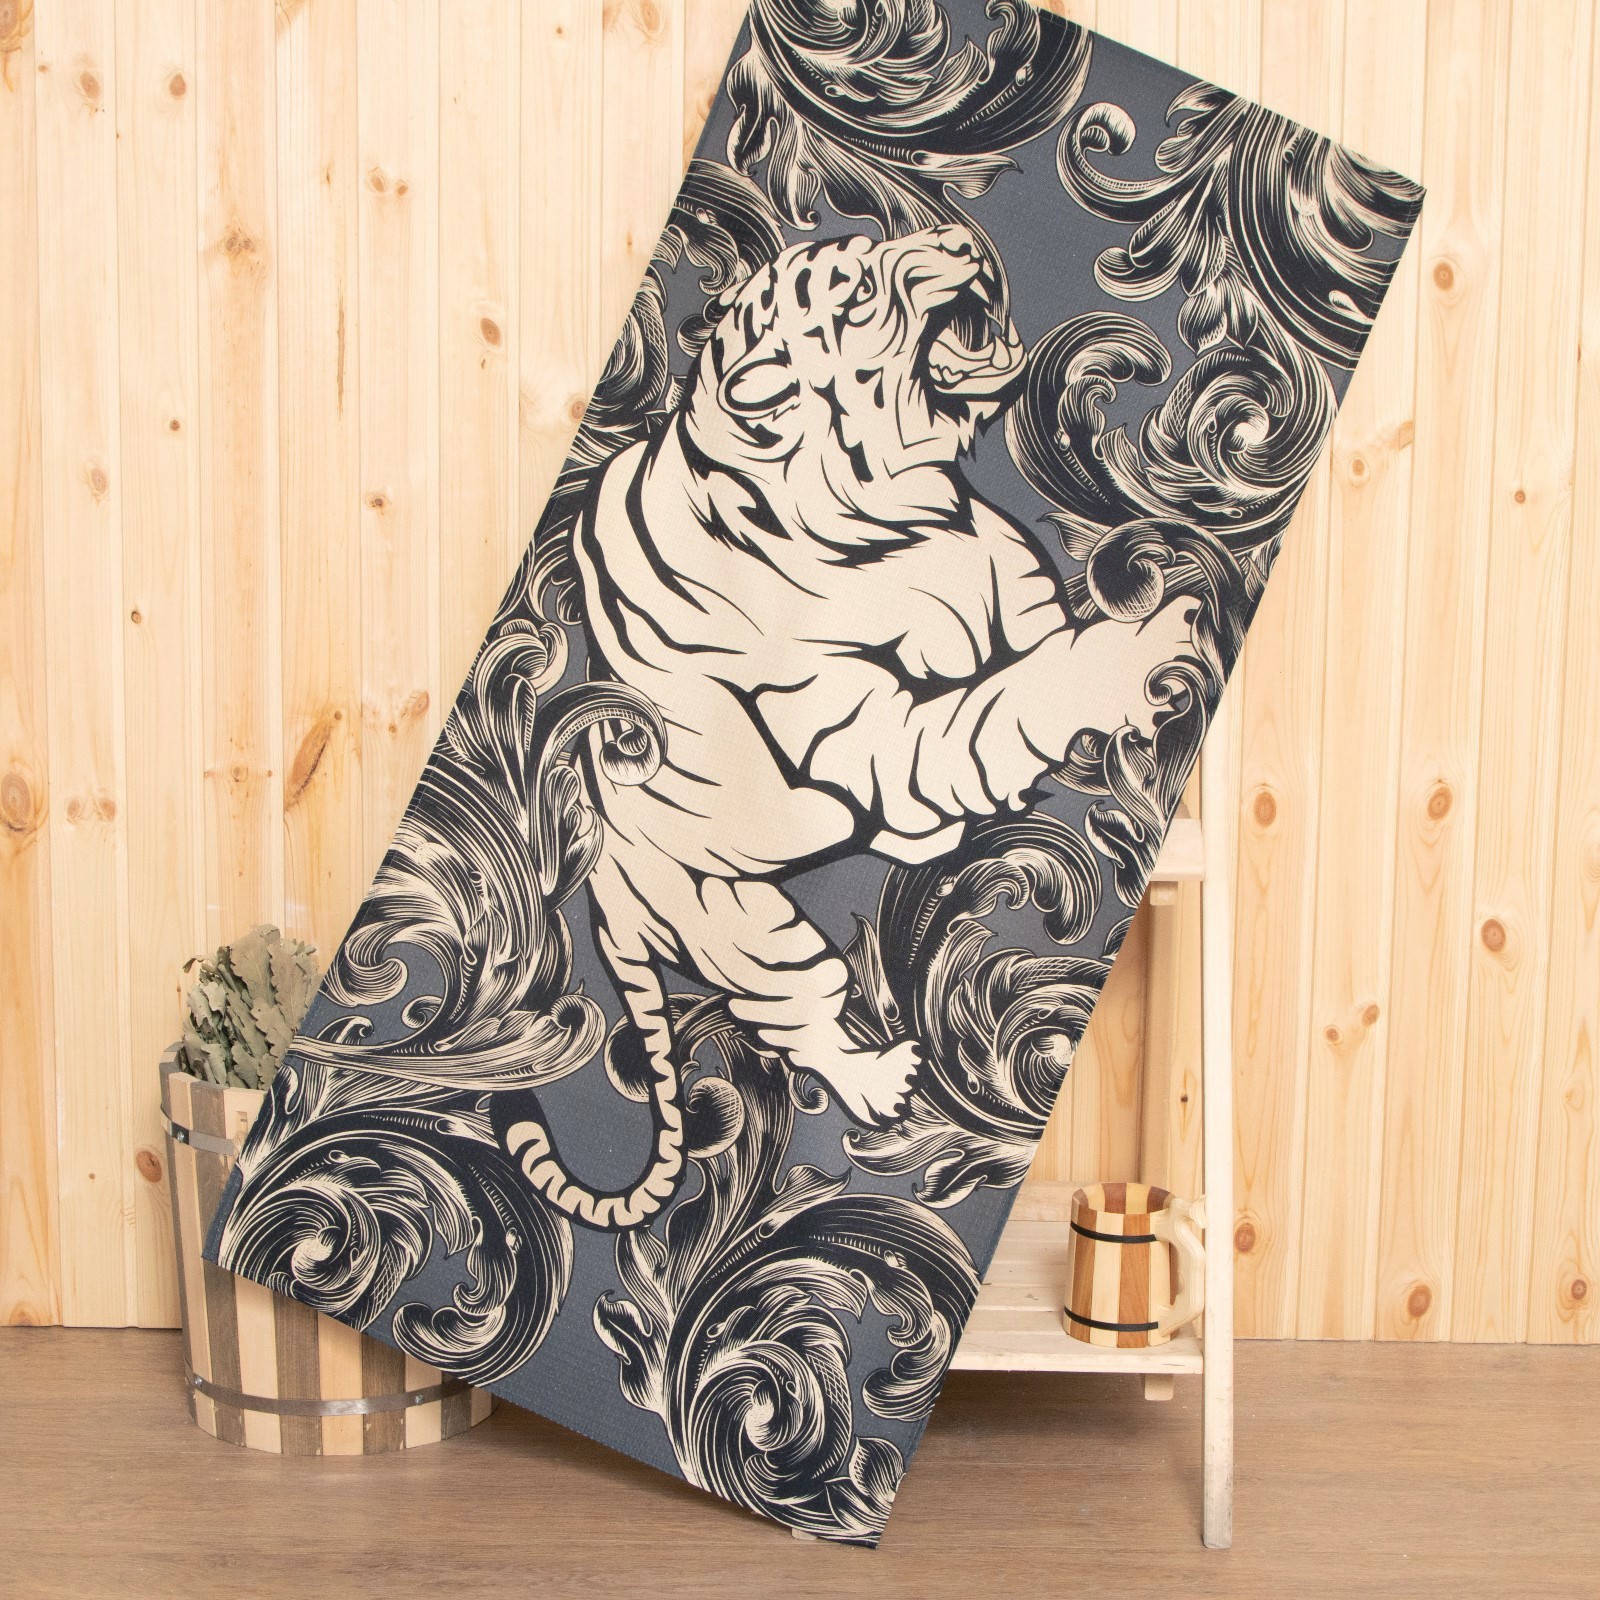 Полотенце Тигр цвет: серый (70х146 см), размер 70х146 см tel910077 Полотенце Тигр цвет: серый (70х146 см) - фото 1